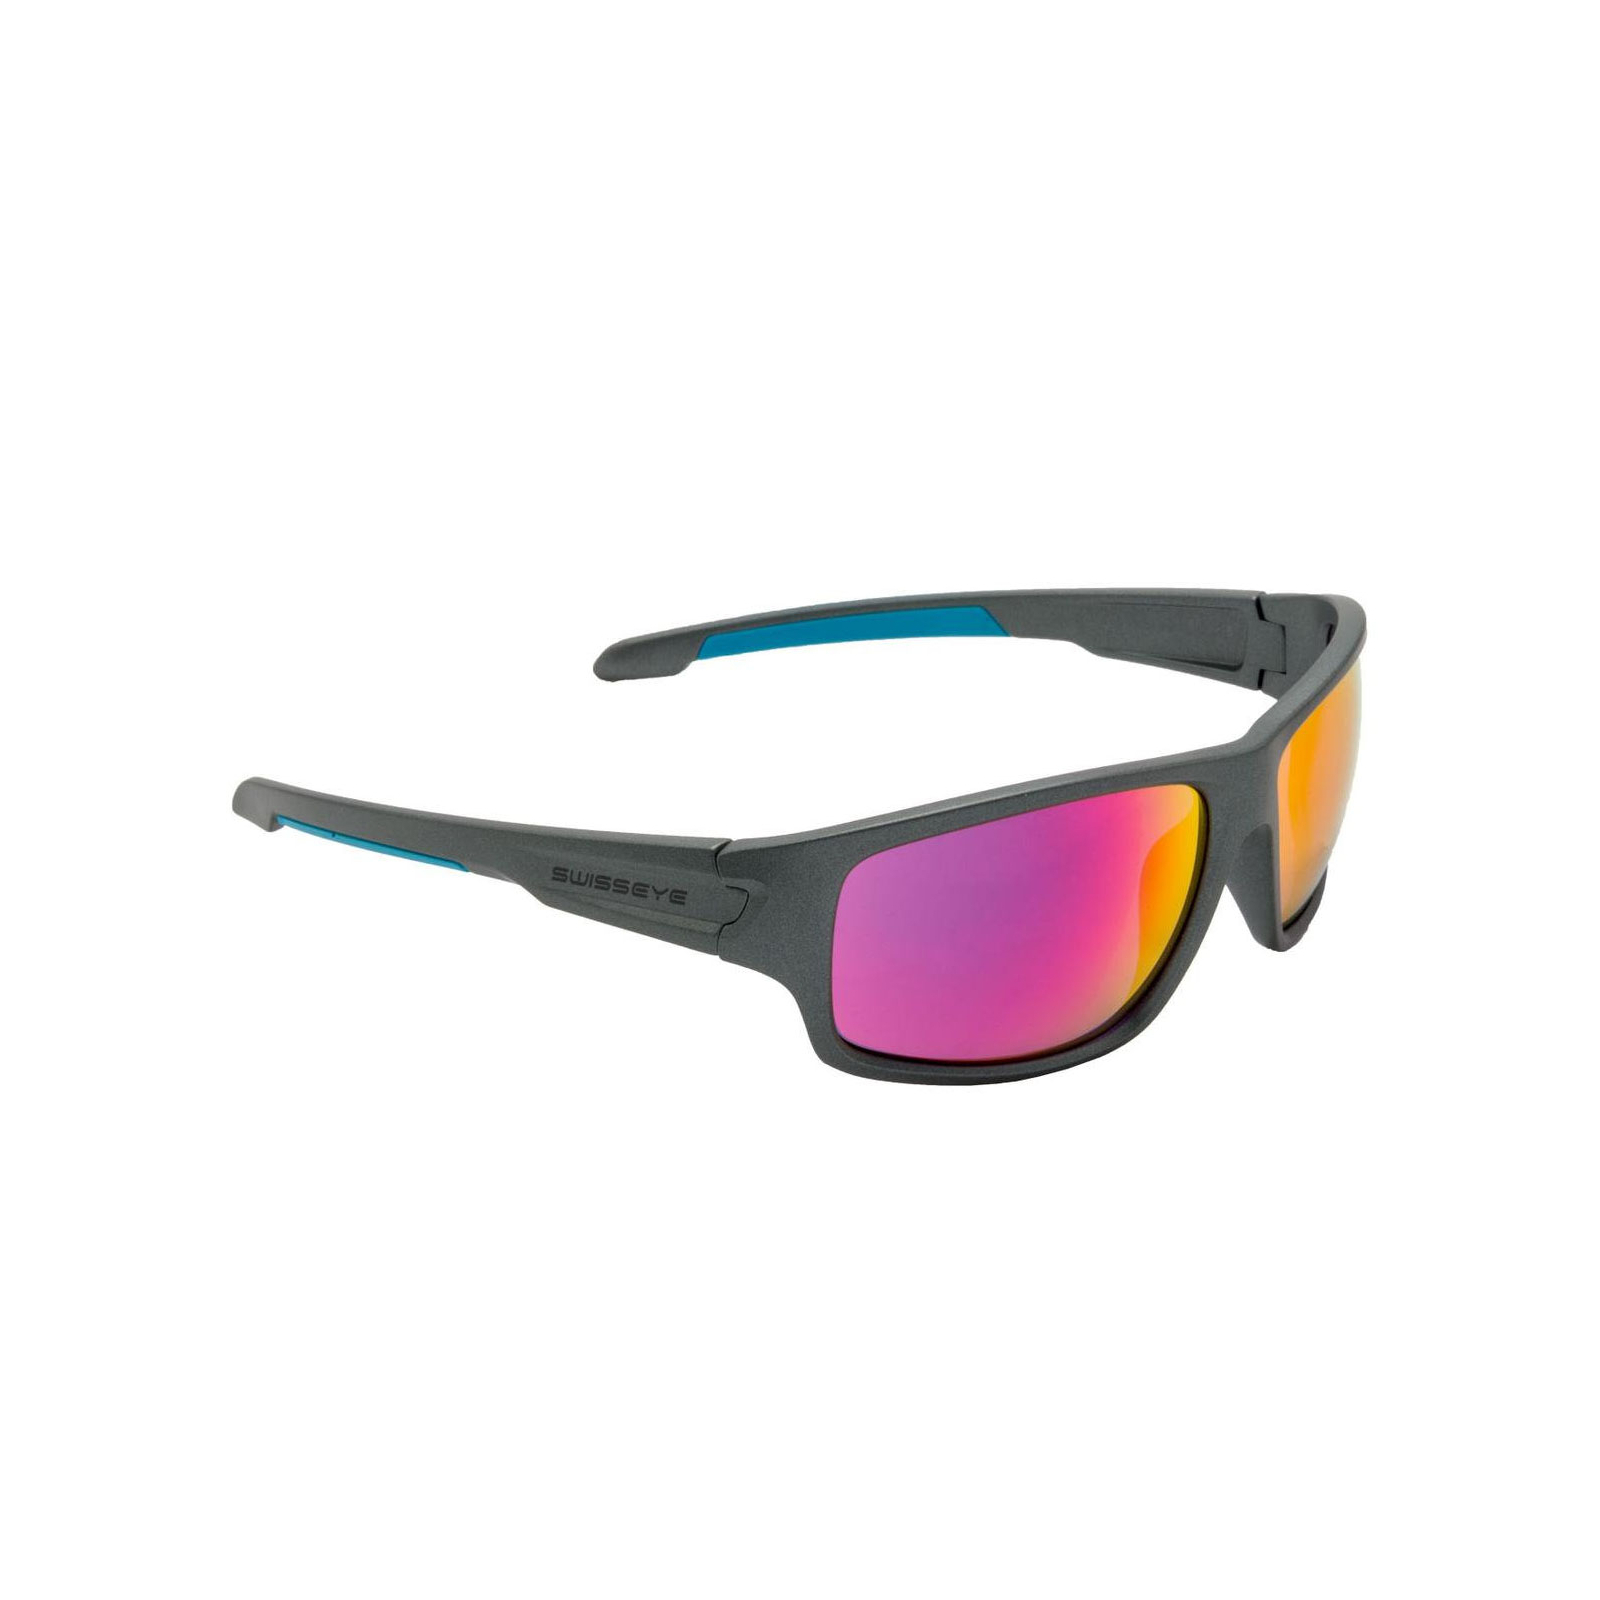 Спортивные очки Swiss Eye FREEFALL, линзы с повыш. контрастом, металлик (14471)